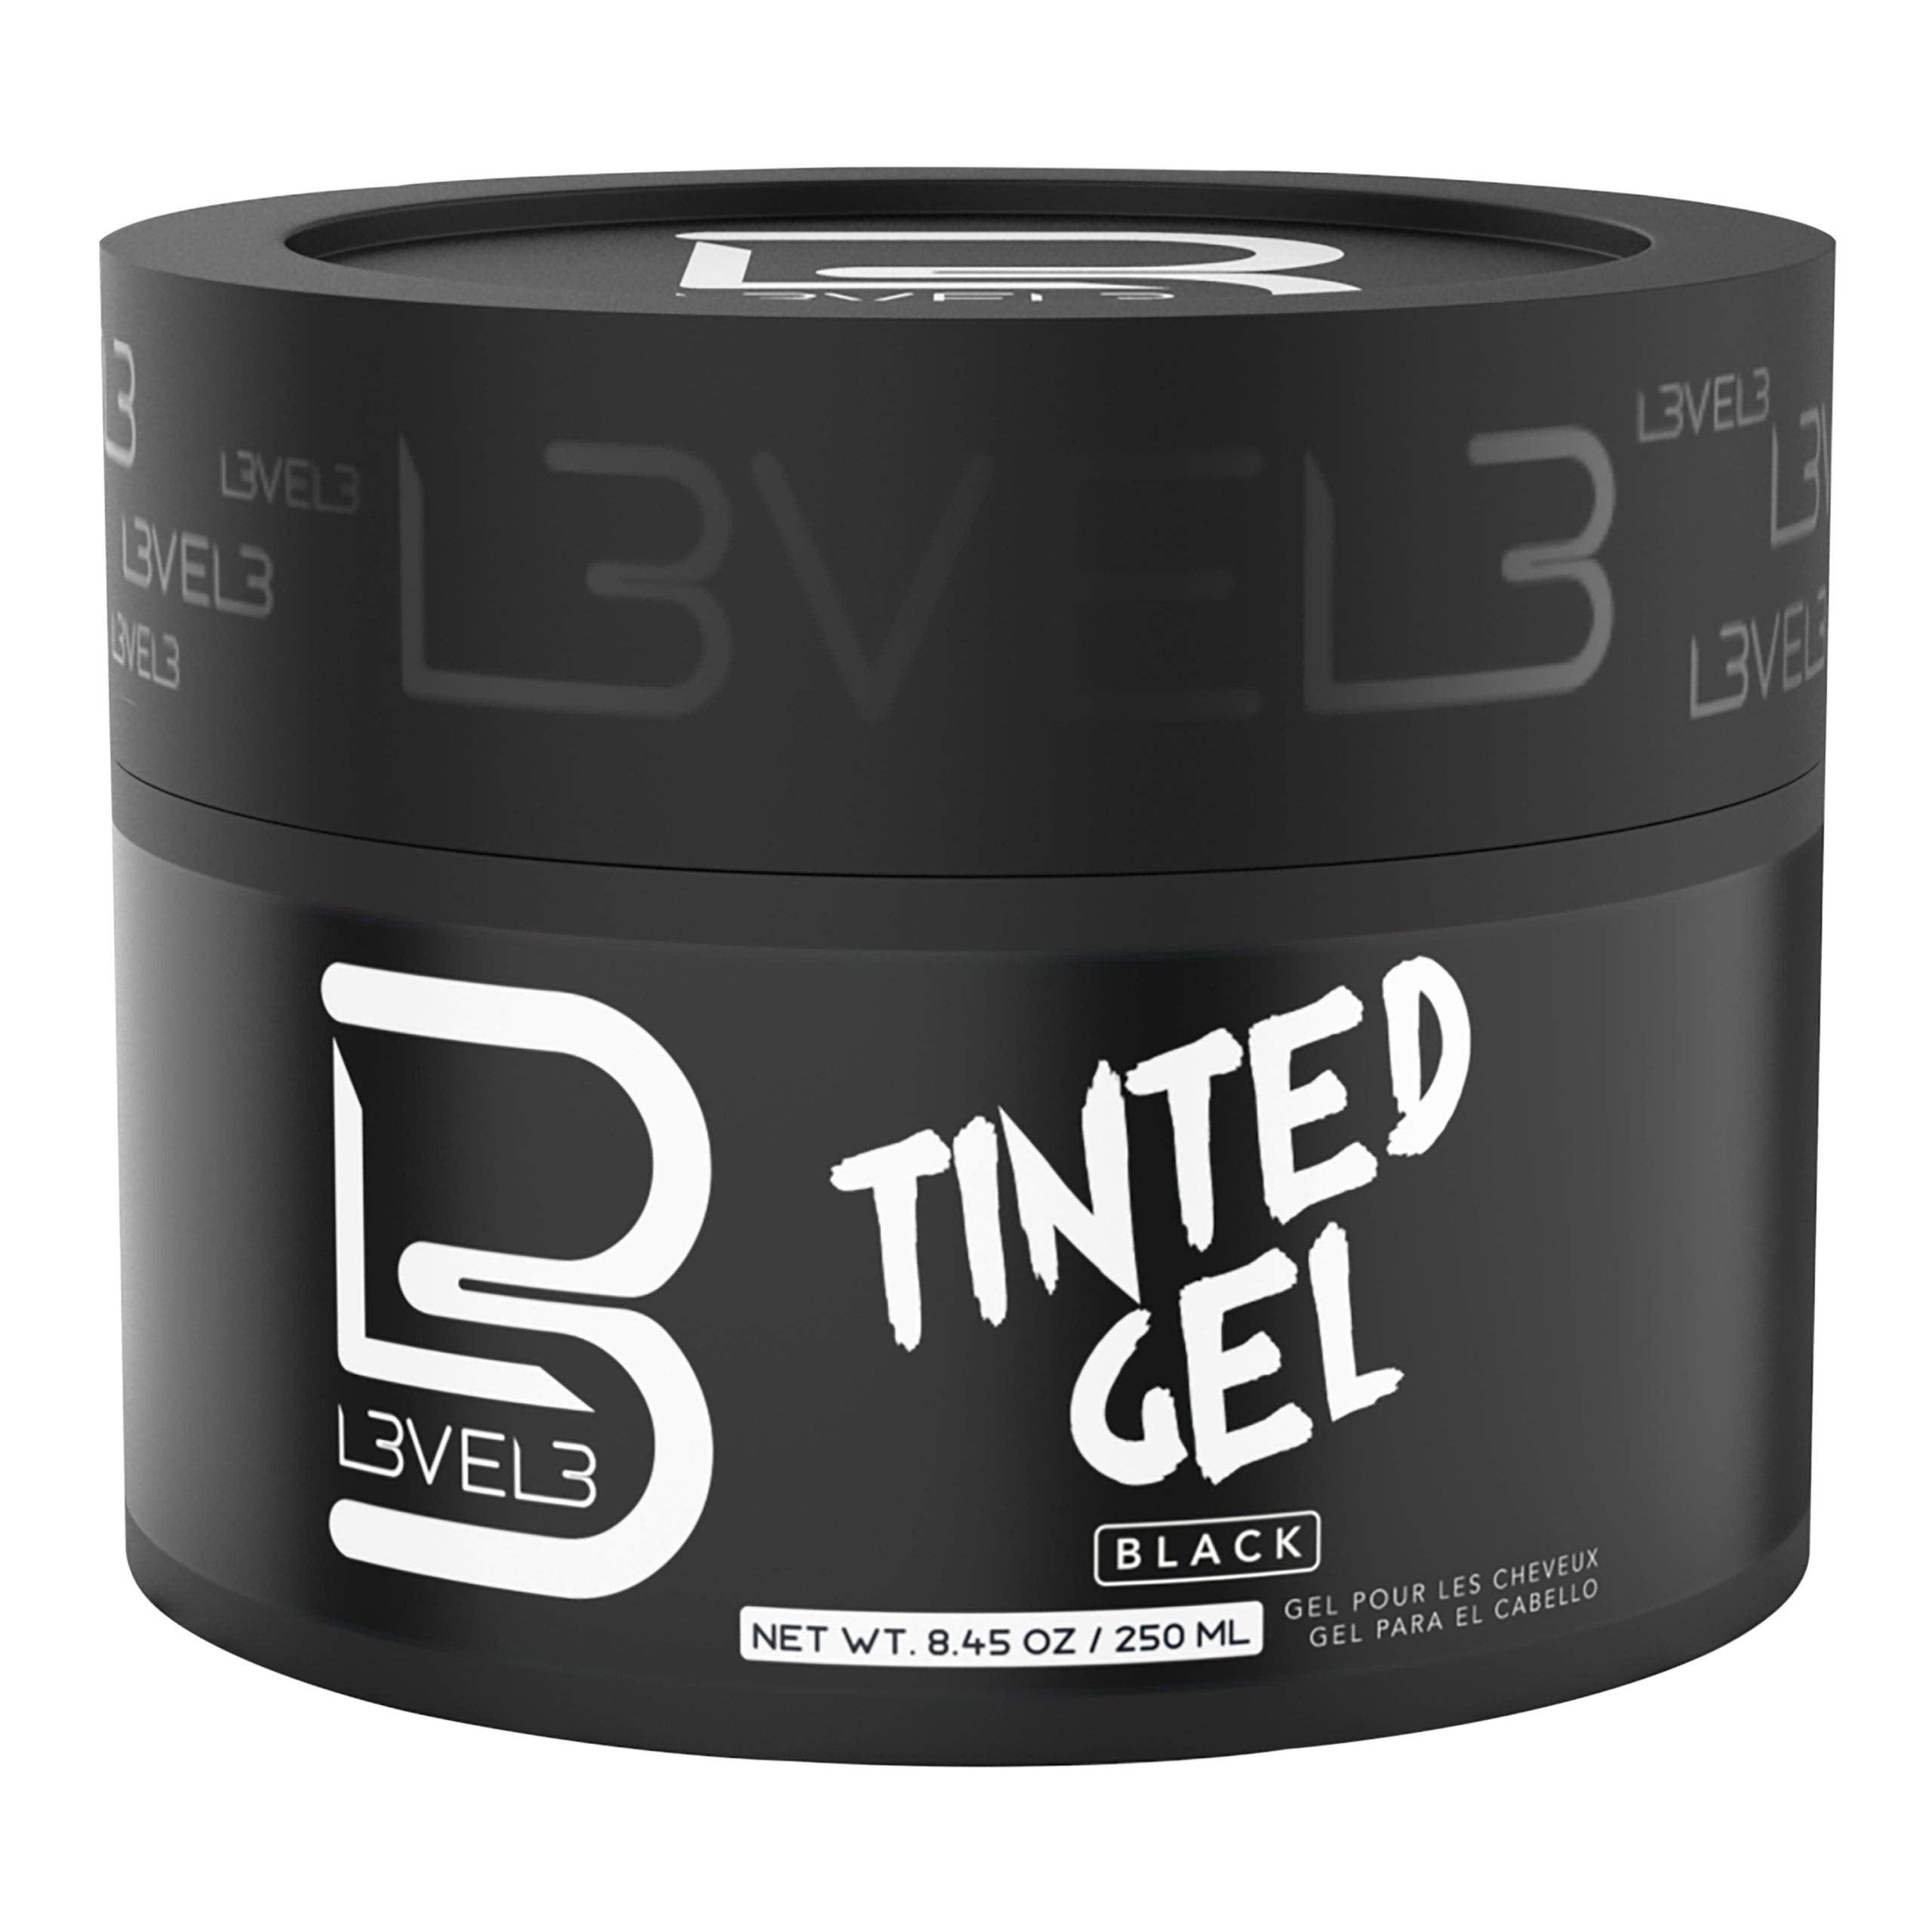 Level 3 Tinted Gel Black Hold Level 2 Covers Grey Hair 8.45fl oz